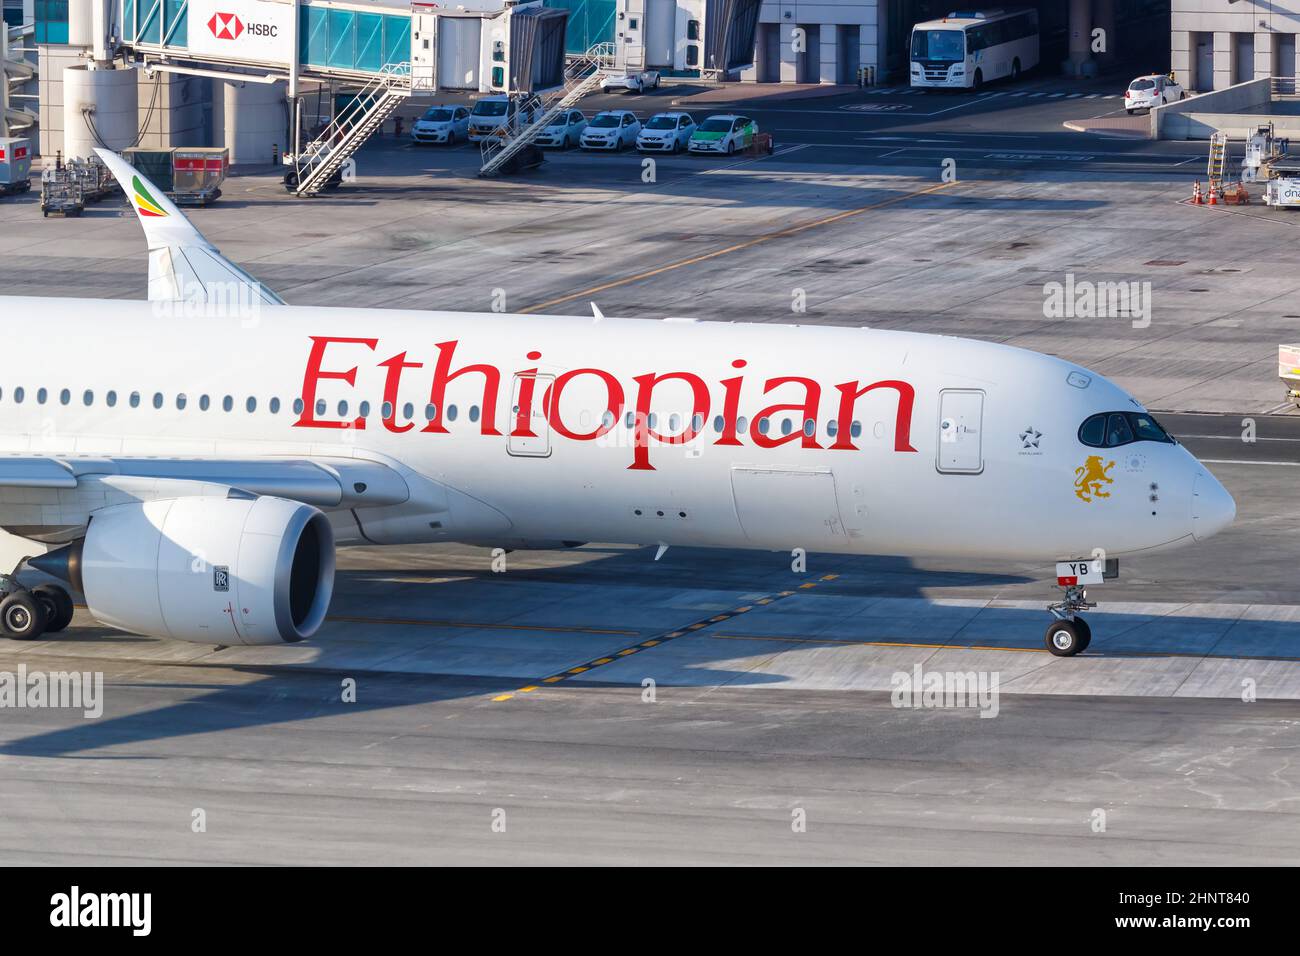 Ethiopian Airlines Airbus A350-900 airplane Dubai airport in the United Arab Emirates Stock Photo